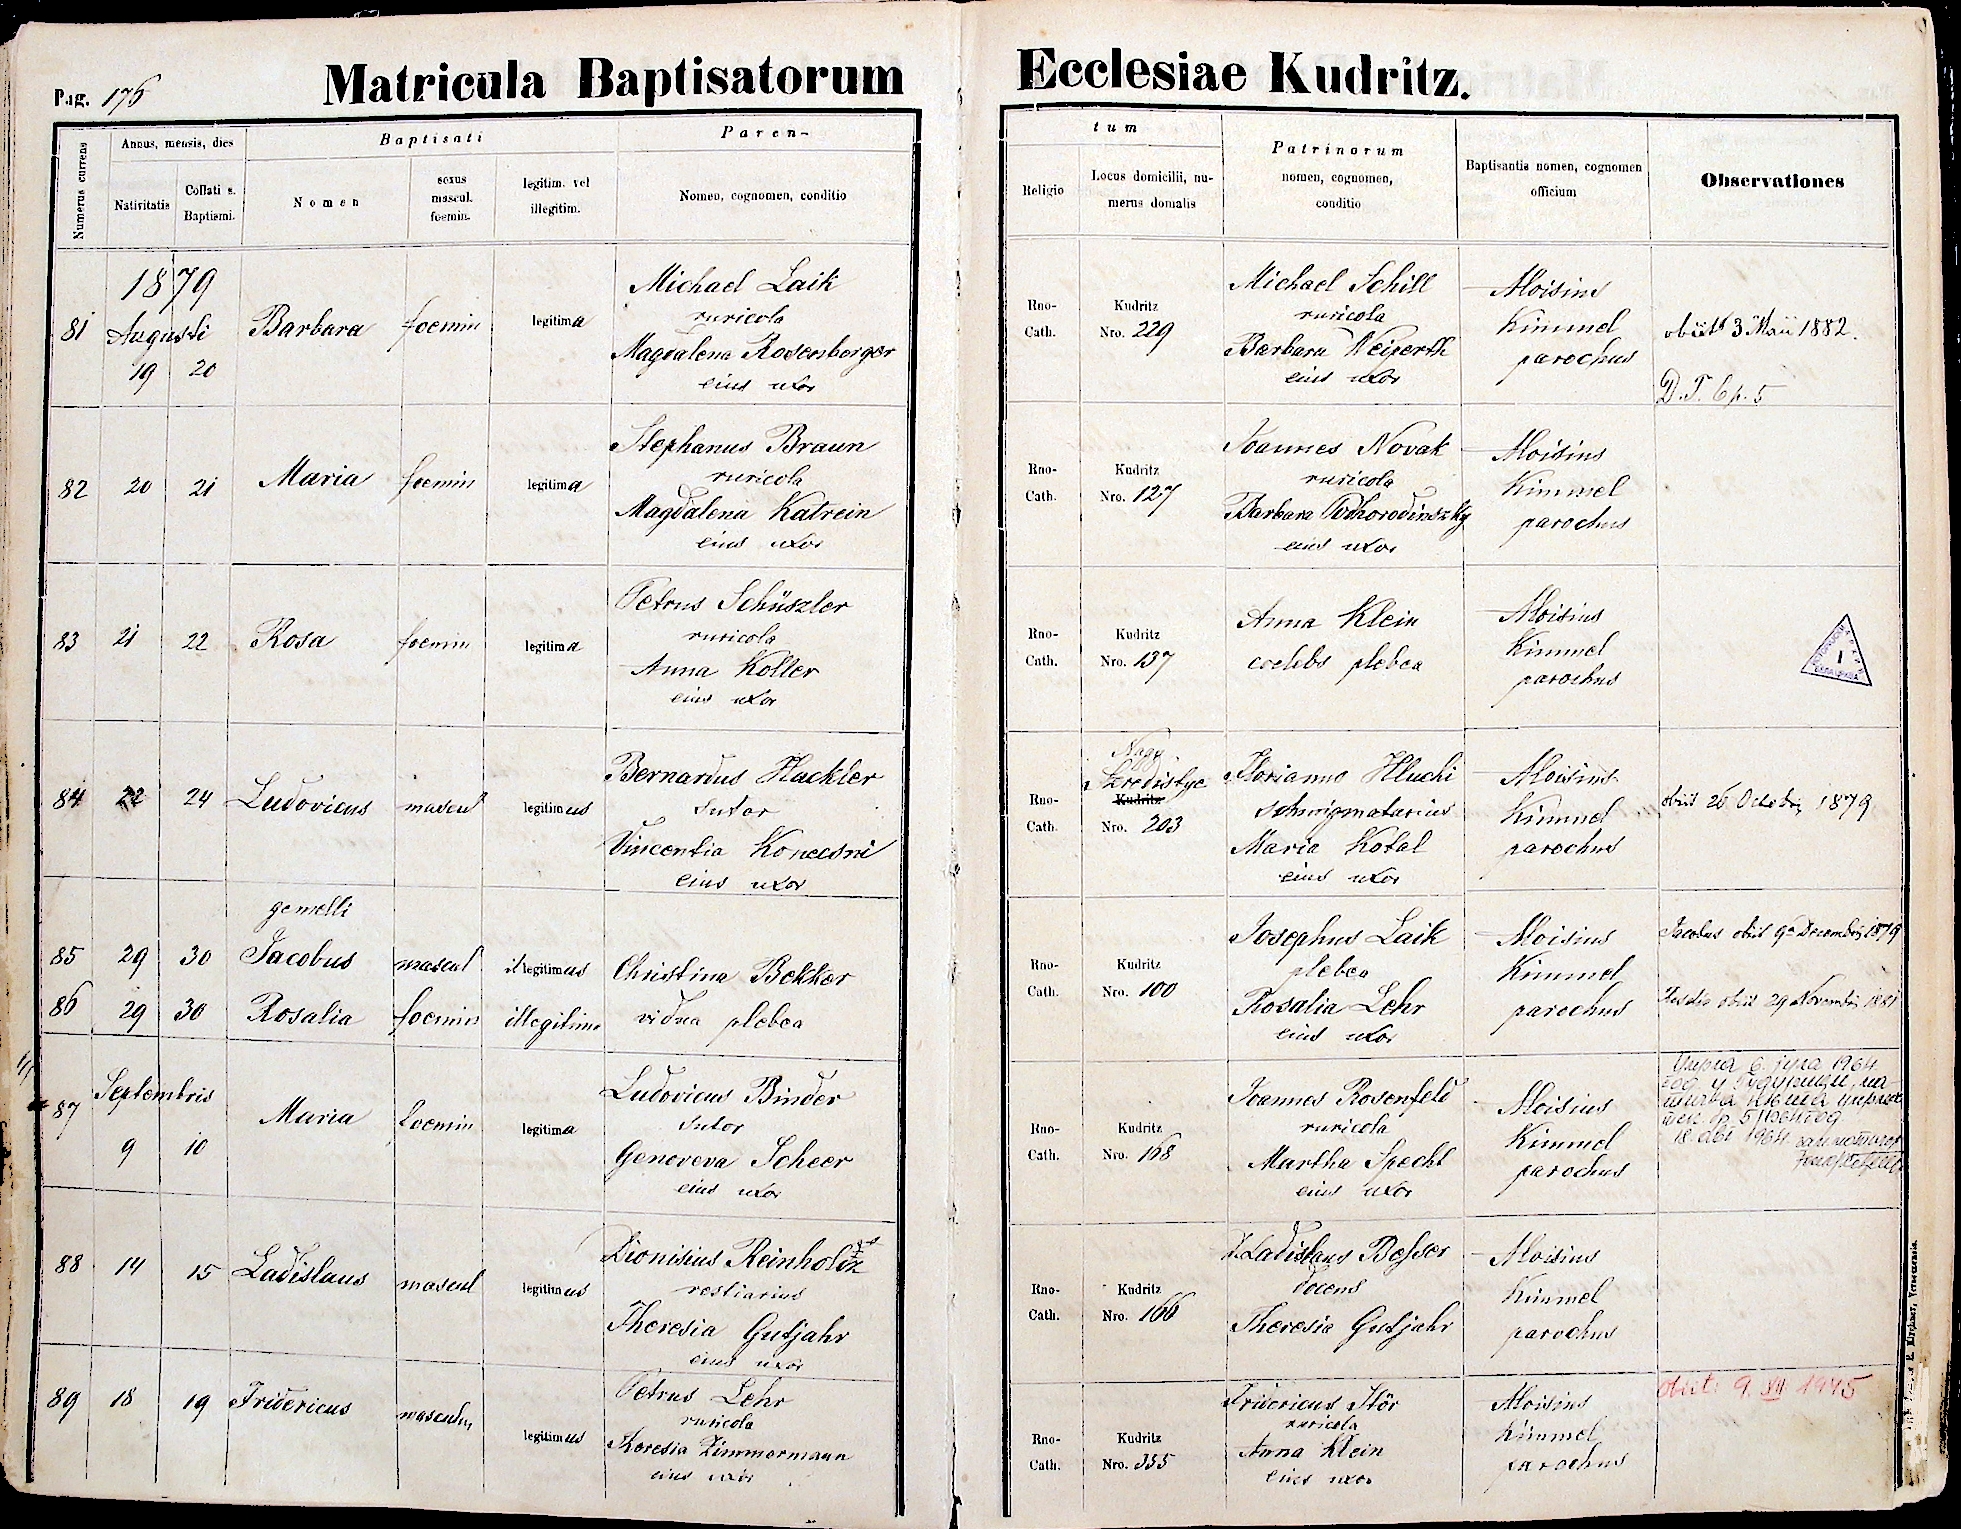 images/church_records/BIRTHS/1884-1899B/1895-1896/176